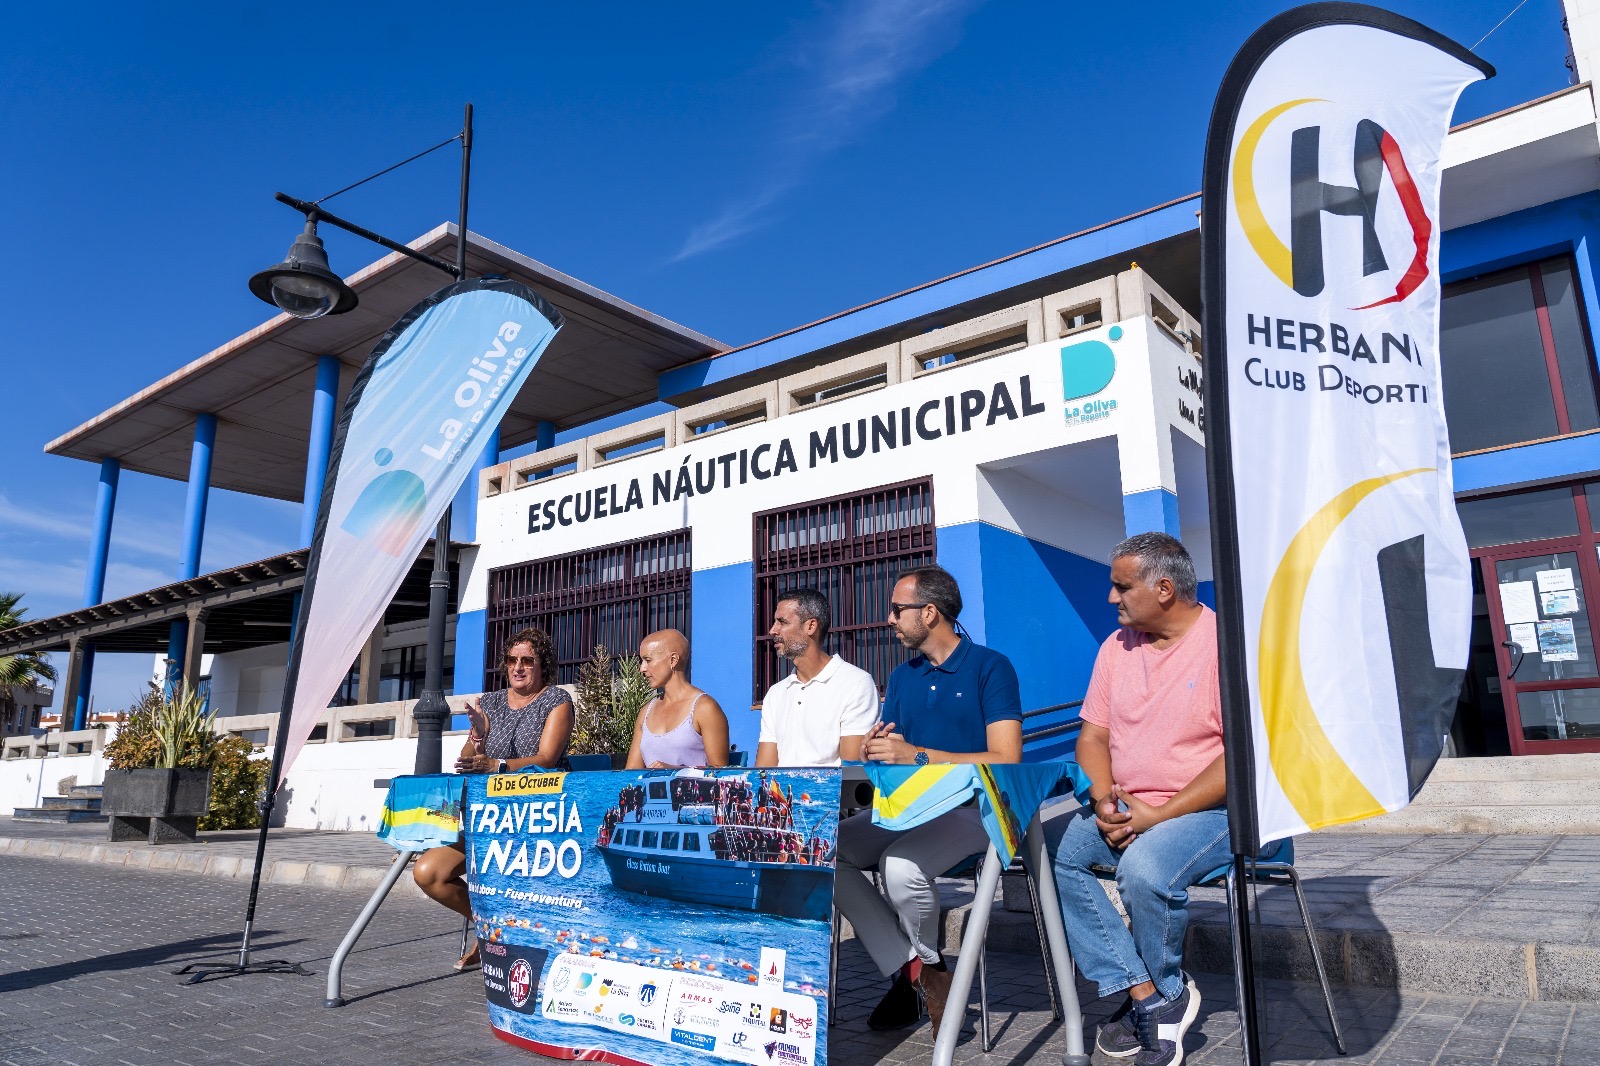 Corralejo is hosting the “XXIV Isla de Lobos Swimming Crossing” this weekend